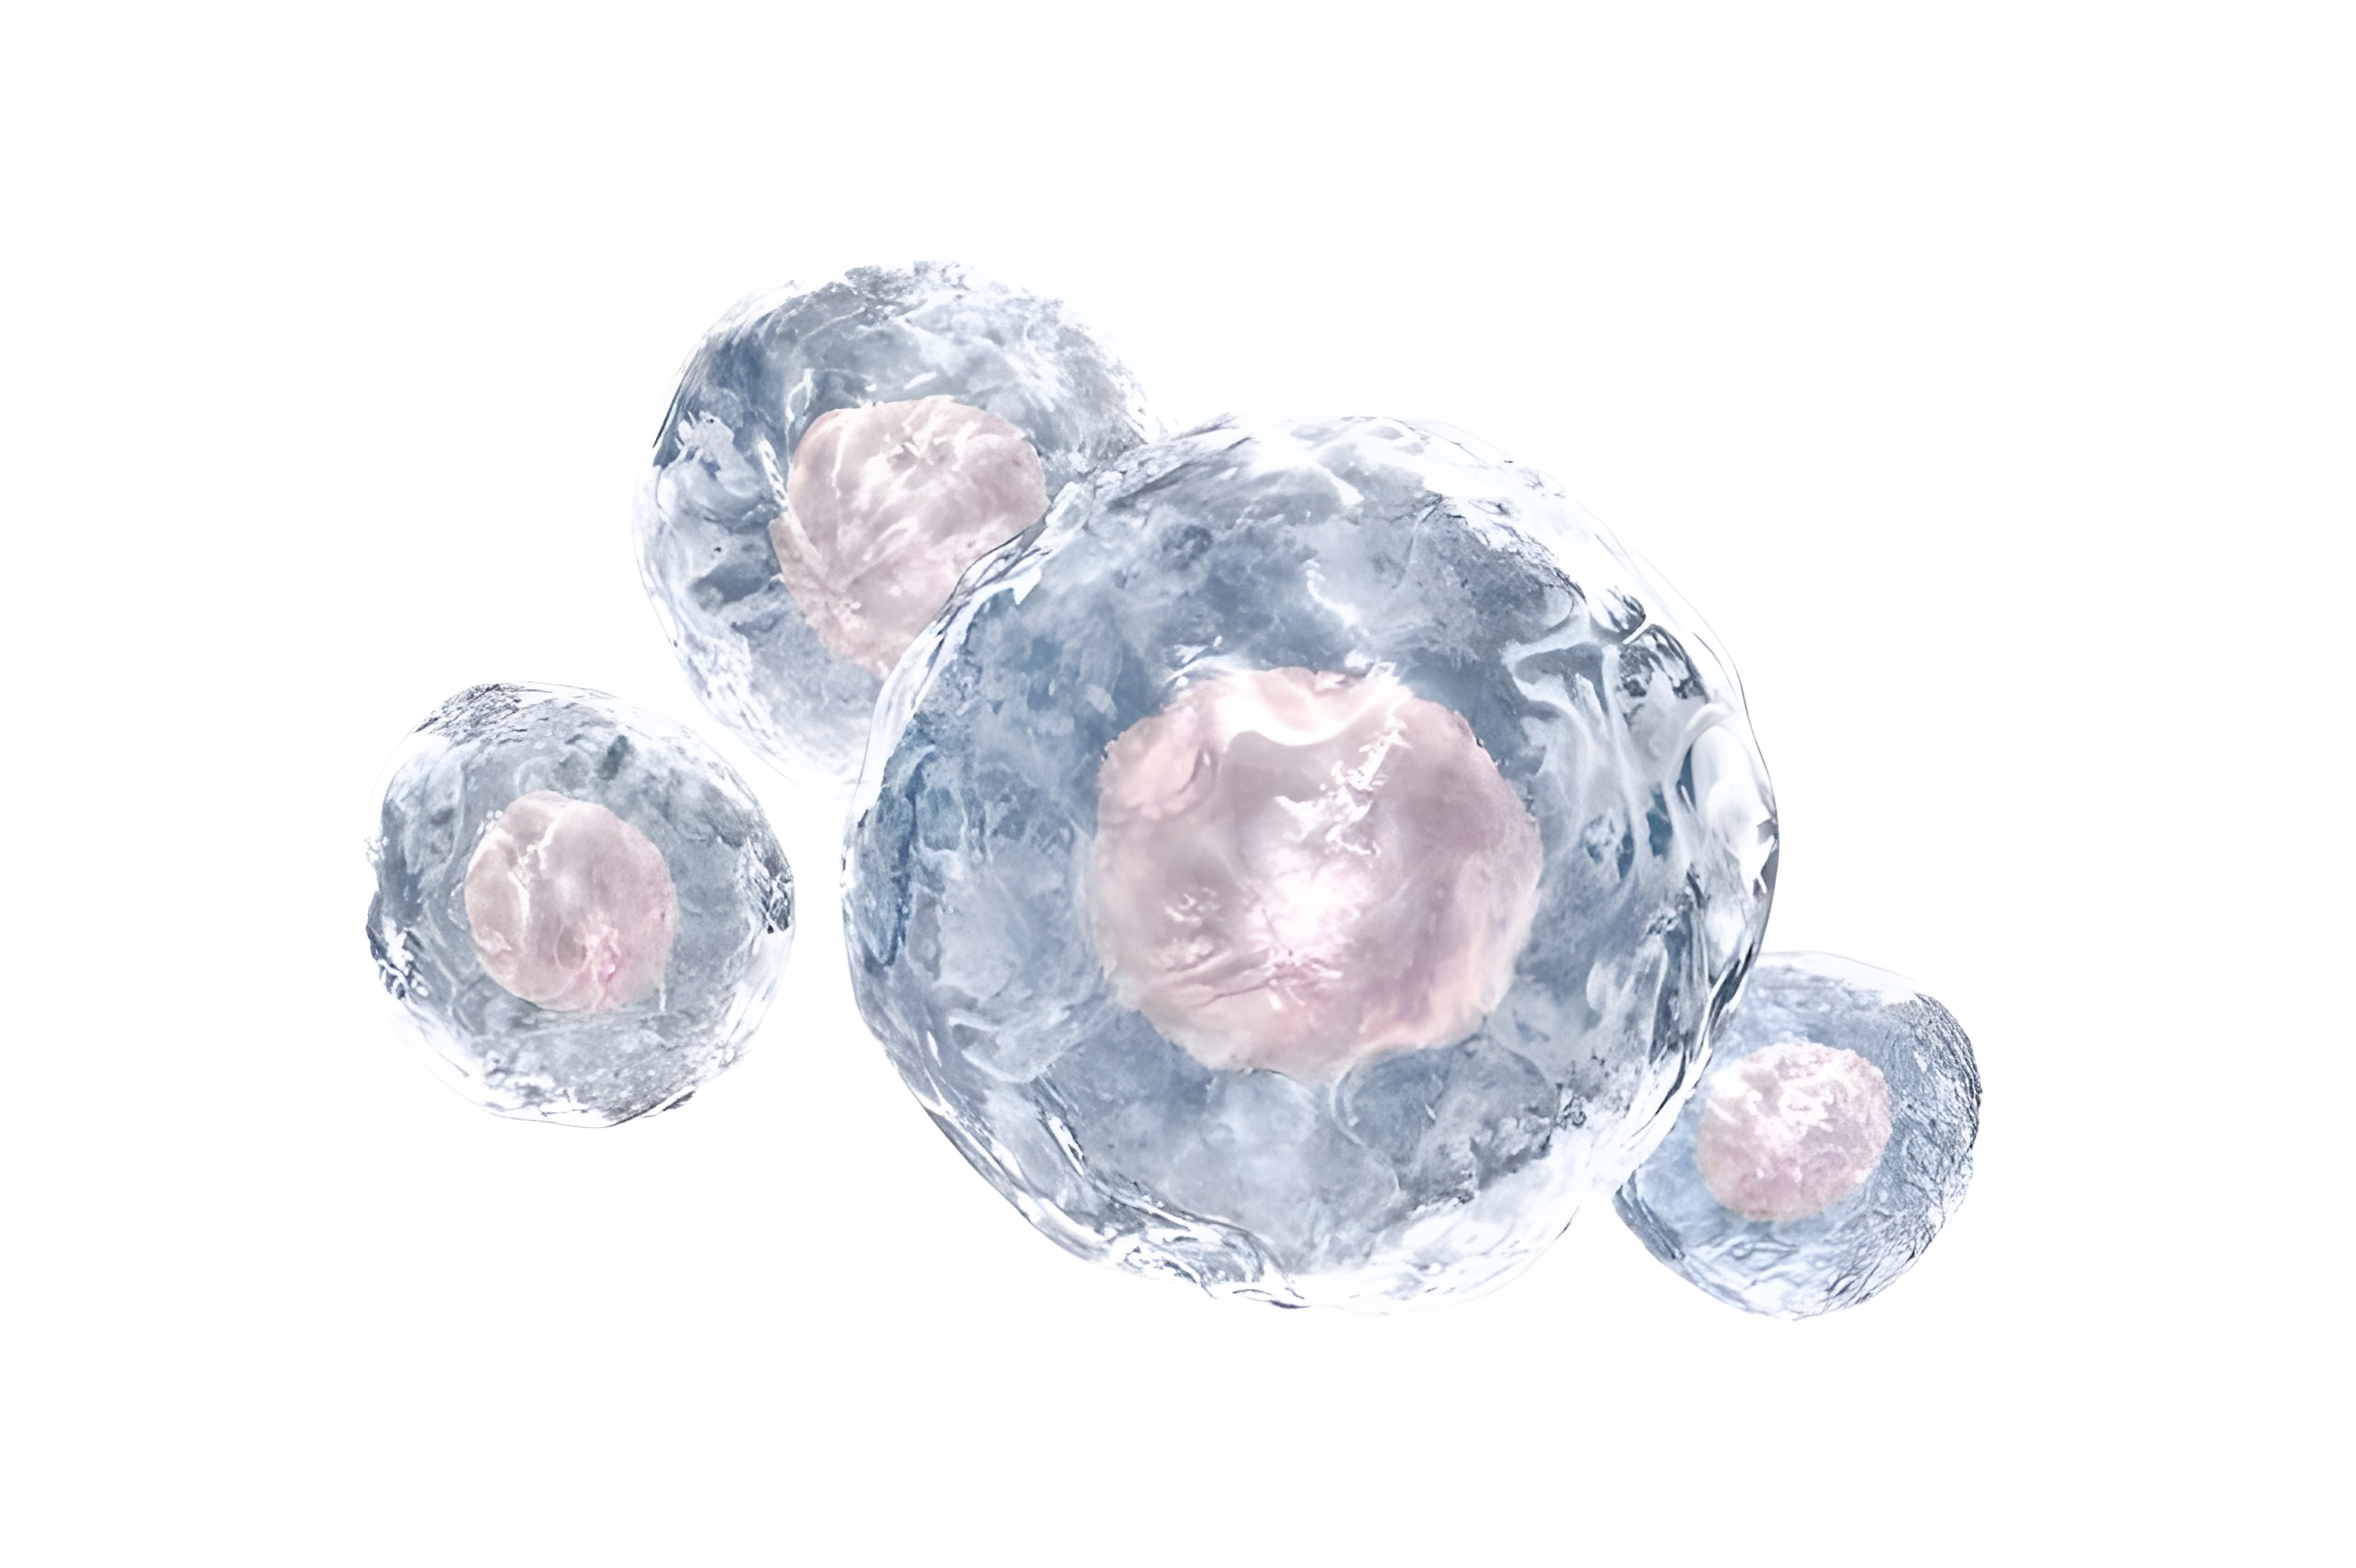 stem cells image